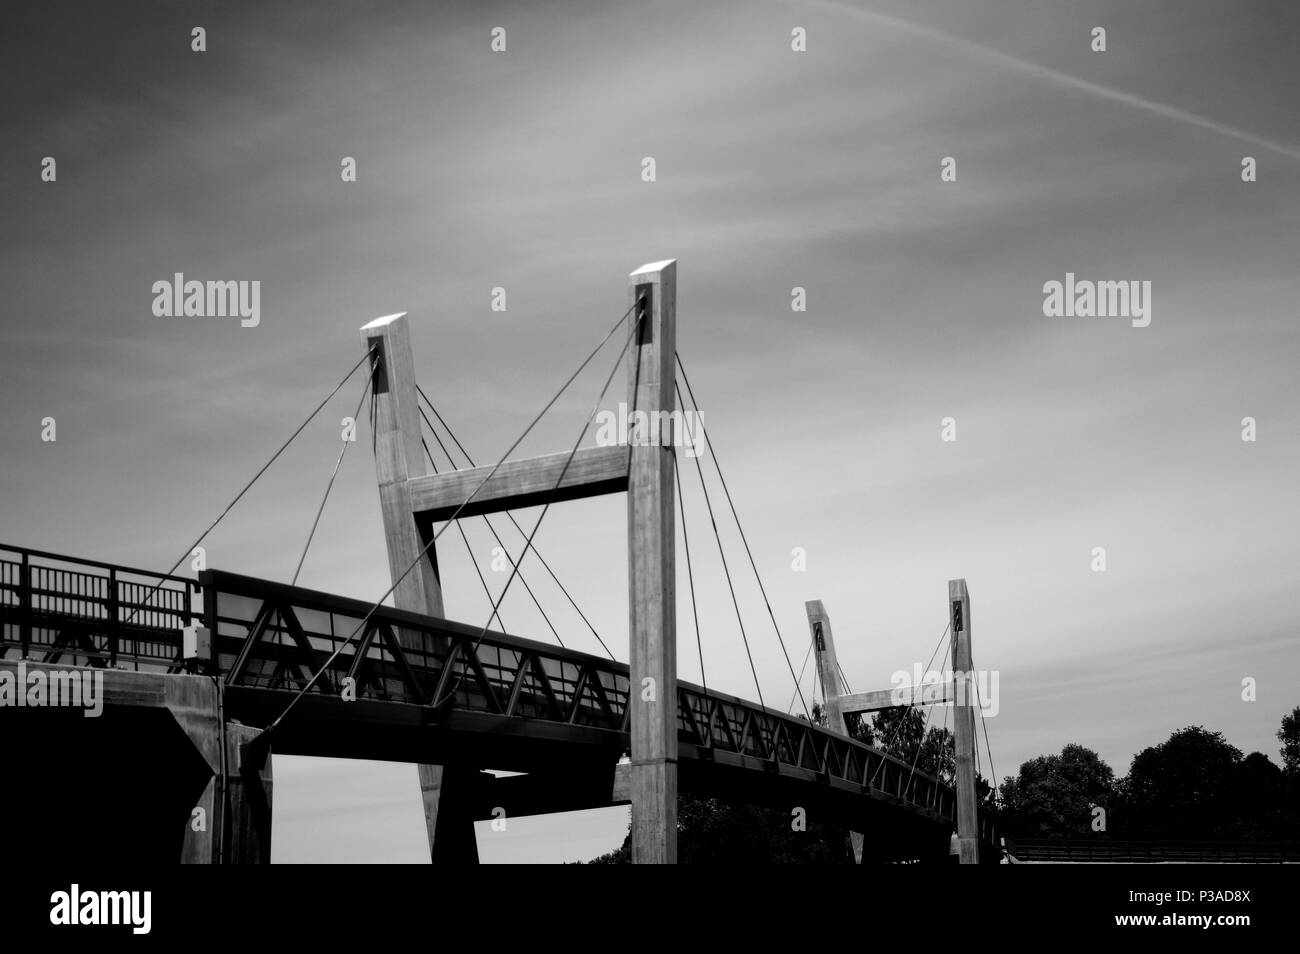 Bridge structure image Stock Photo - Alamy